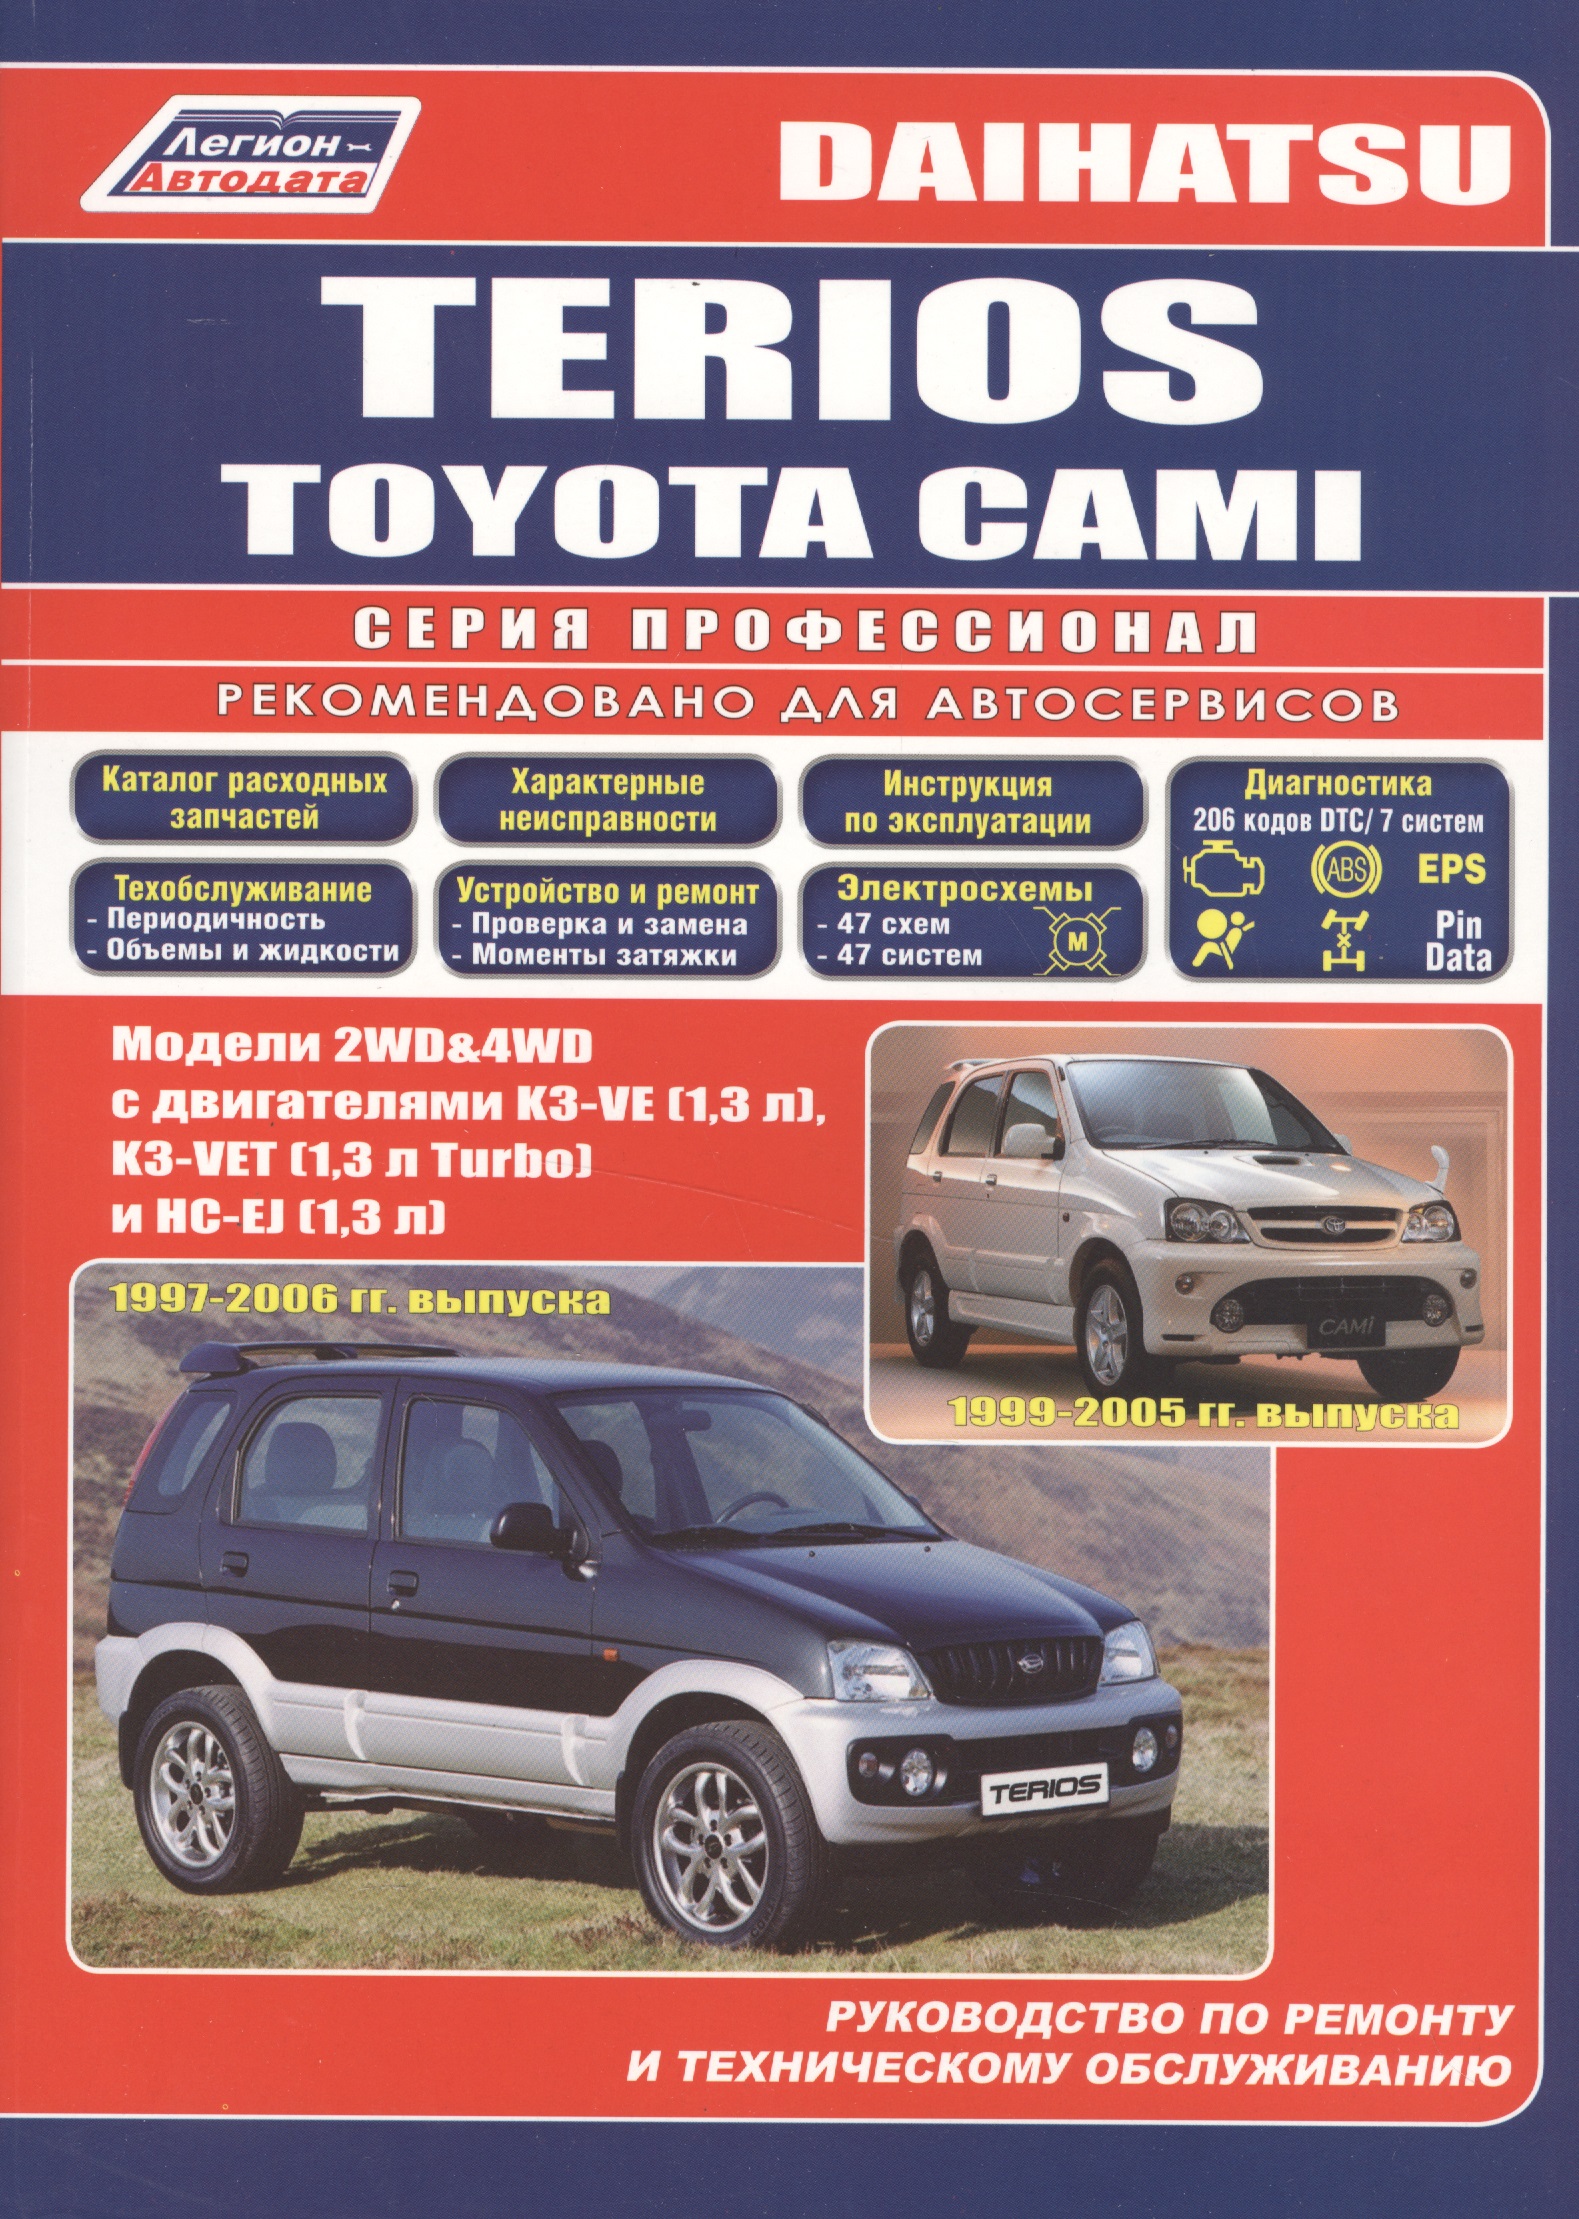 Daihatsu TERIOS. Toyota CAMI.  2WD&4WD   3-VE (1, 3 .), 3-VET (1, 3 Turbo)  HC-EJ (1, 3 .)      